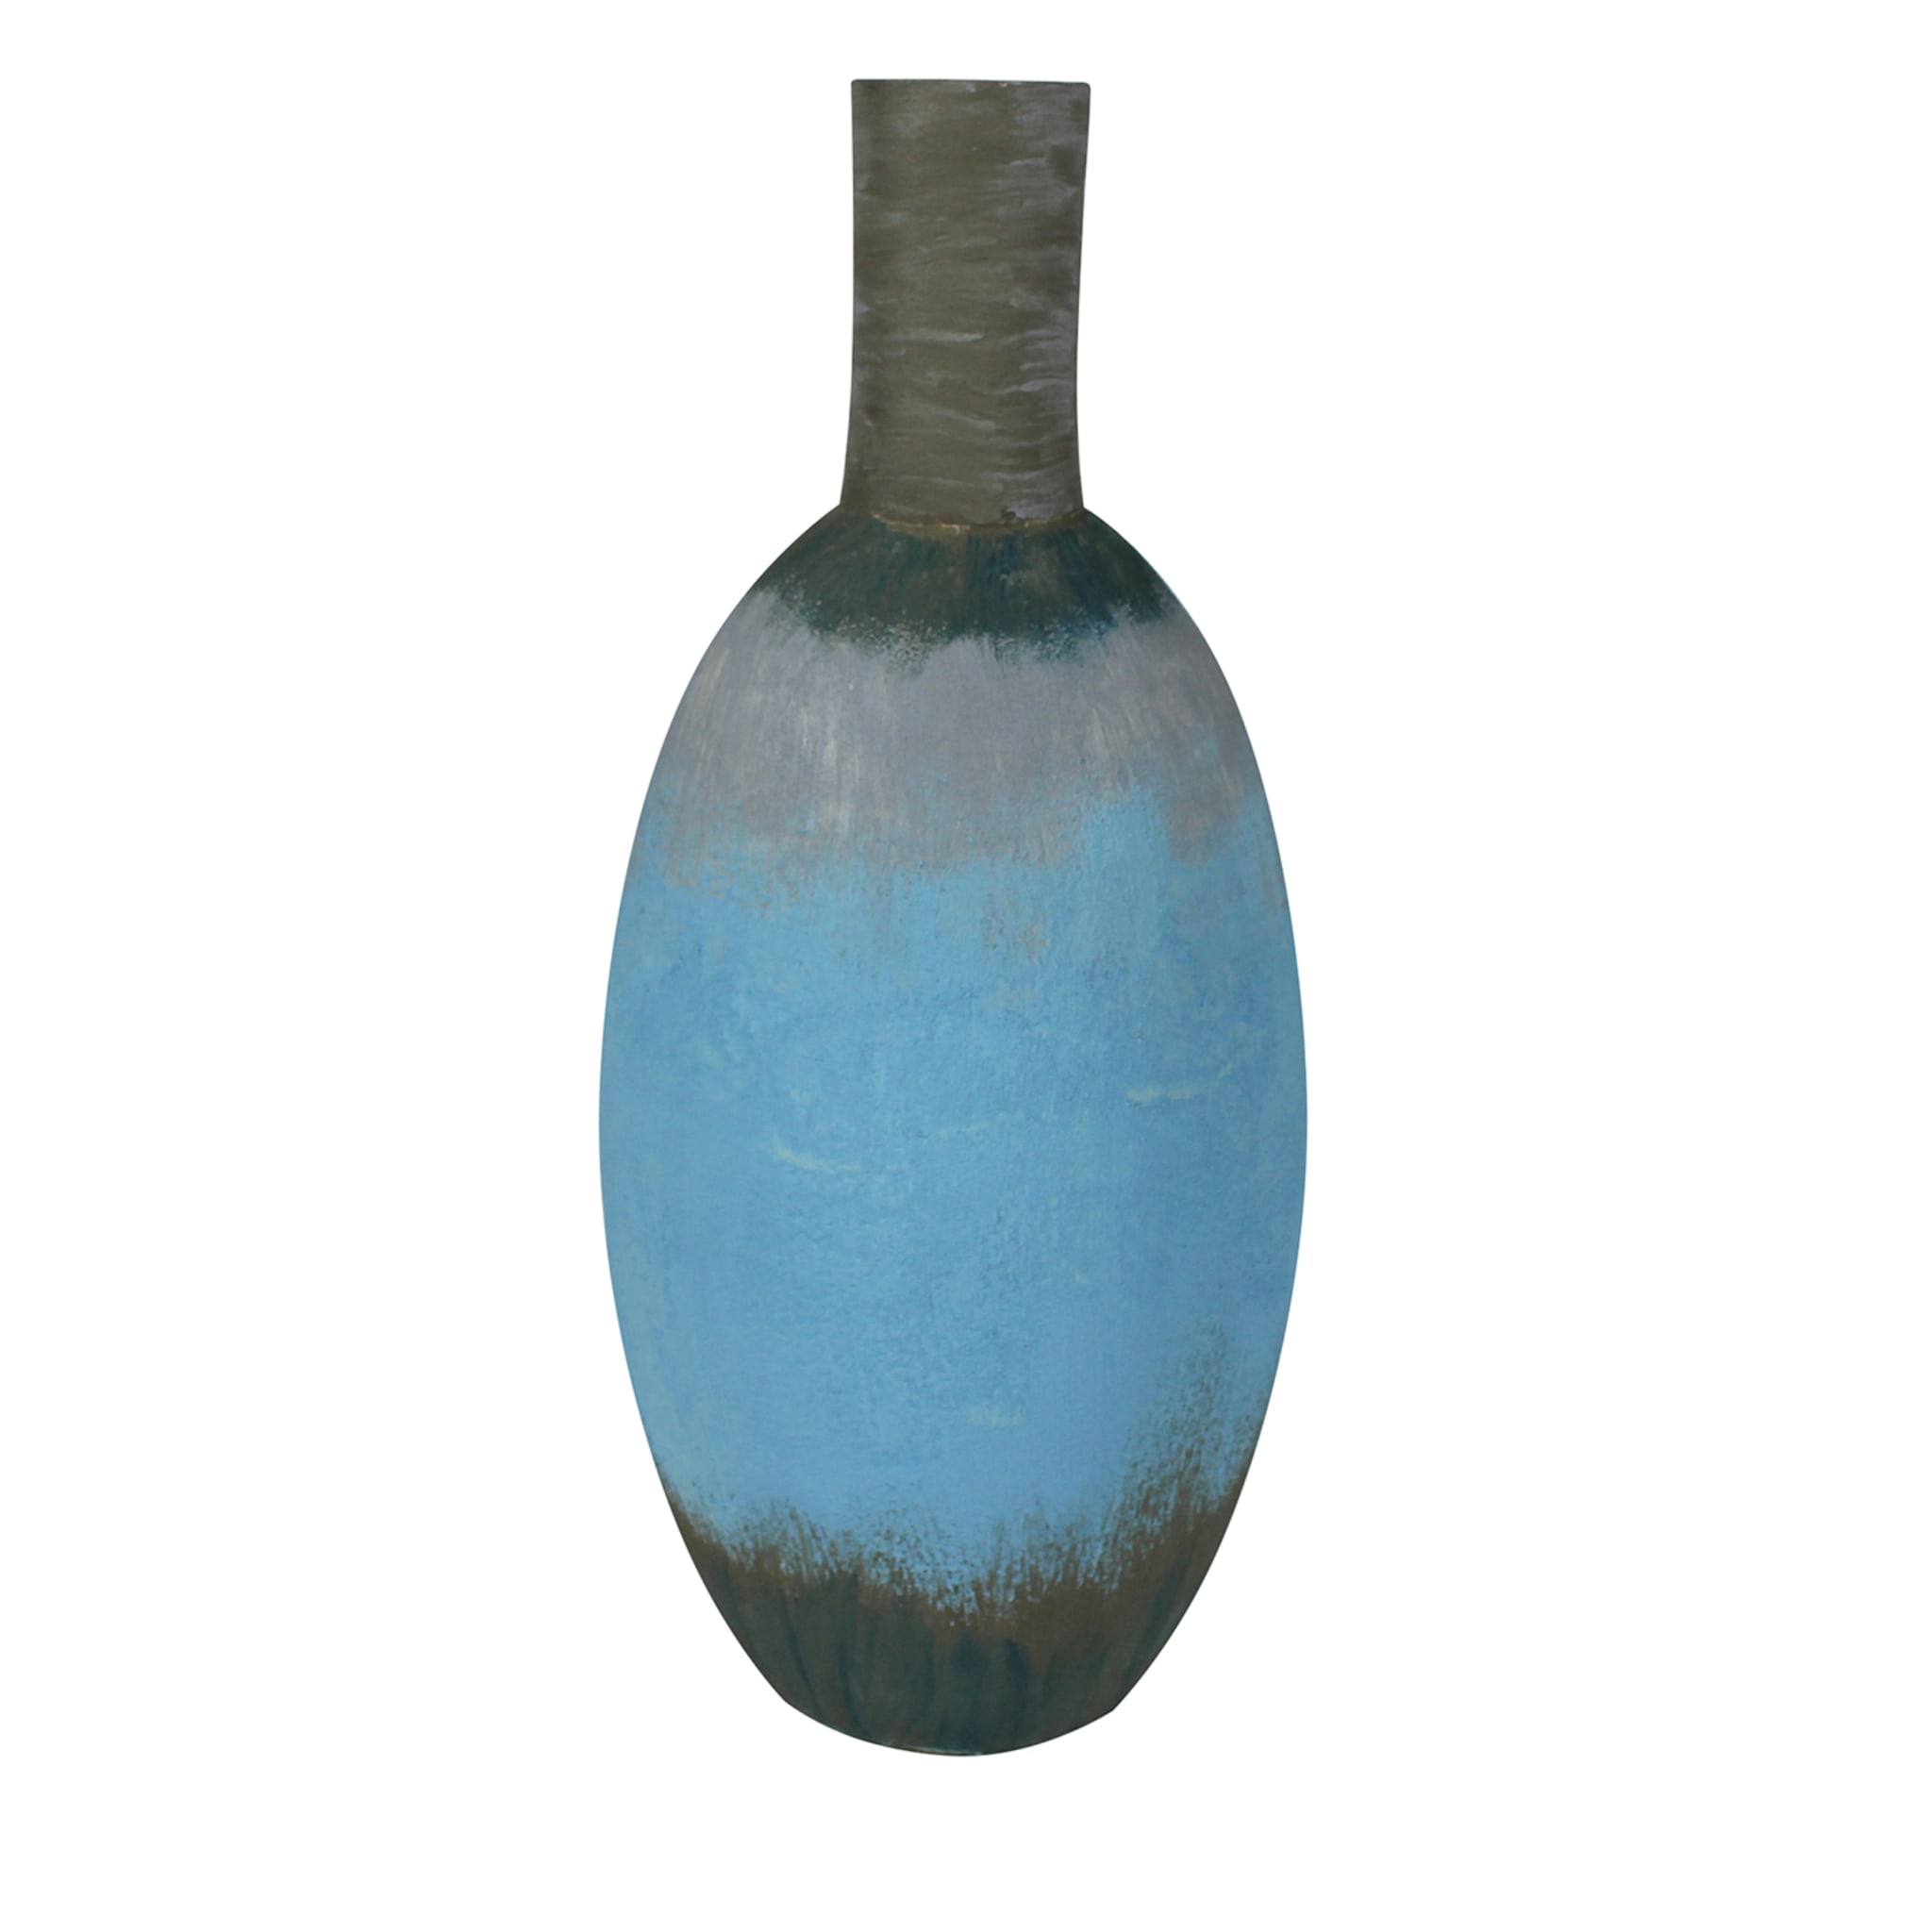 Bulging Light-Blue, Gray, Green Vase 13 by Mascia Meccani - Main view